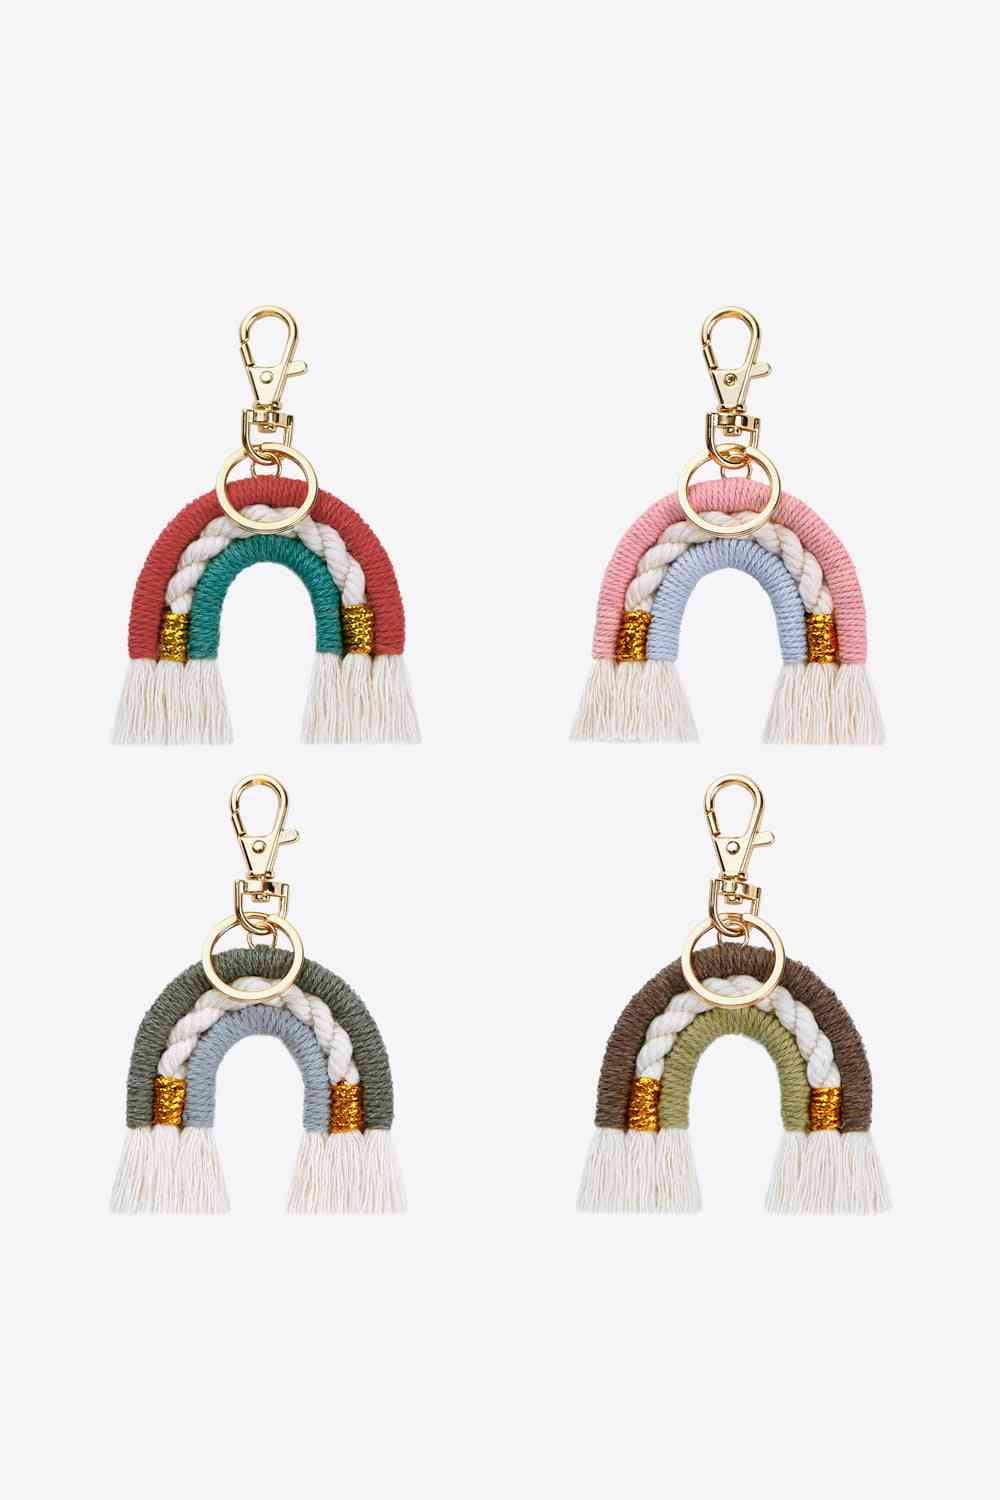 Paquete de 4 llaveros con borlas arcoíris al azar